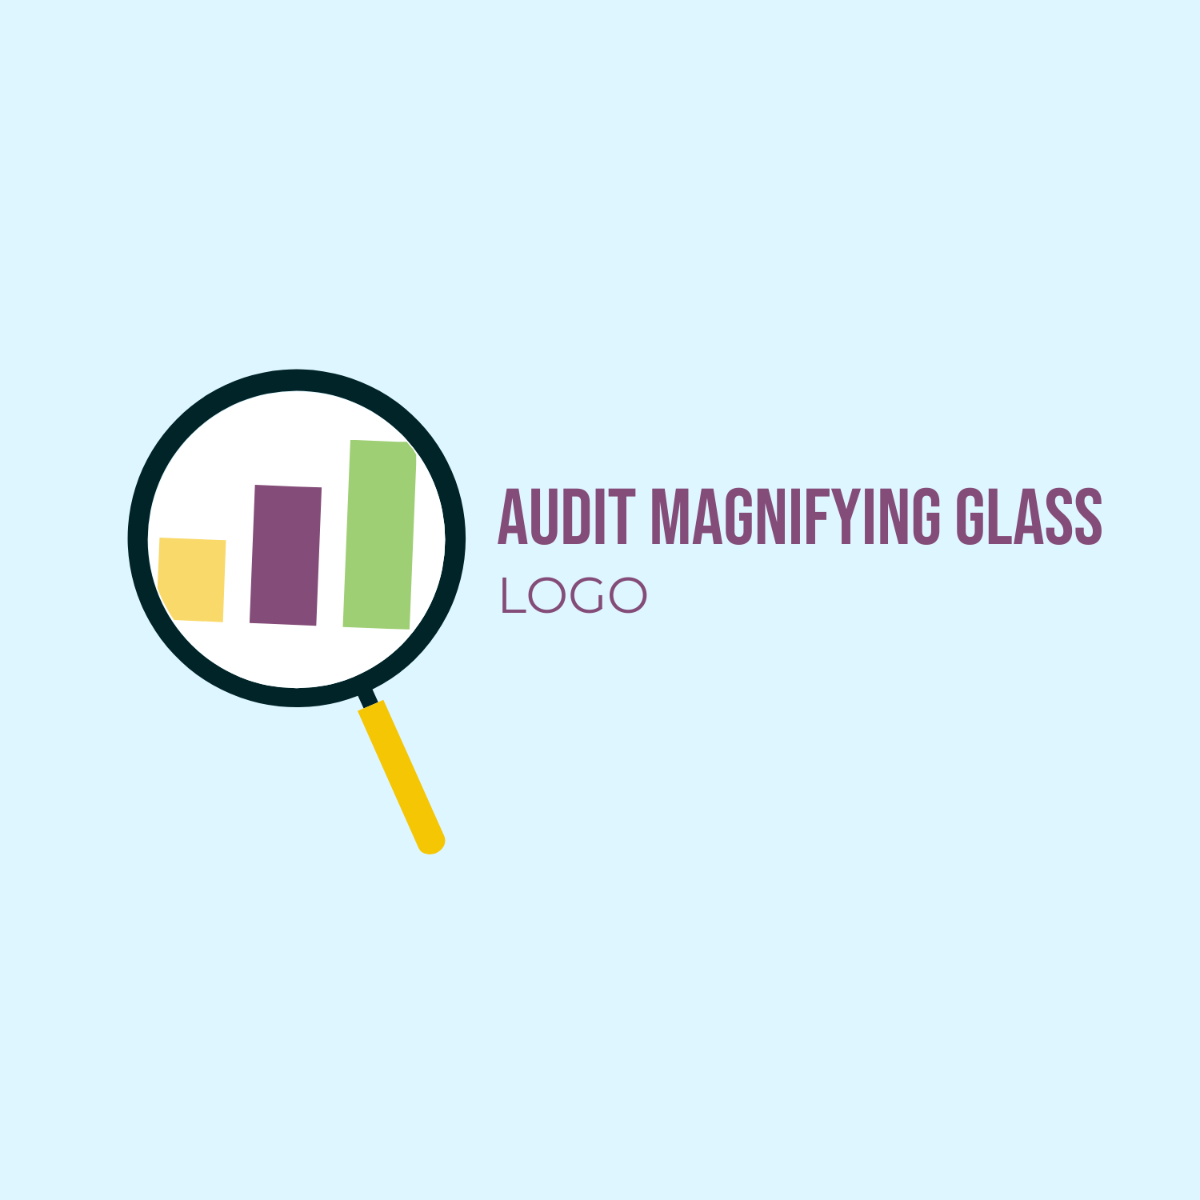 Audit Magnifying Glass Logo